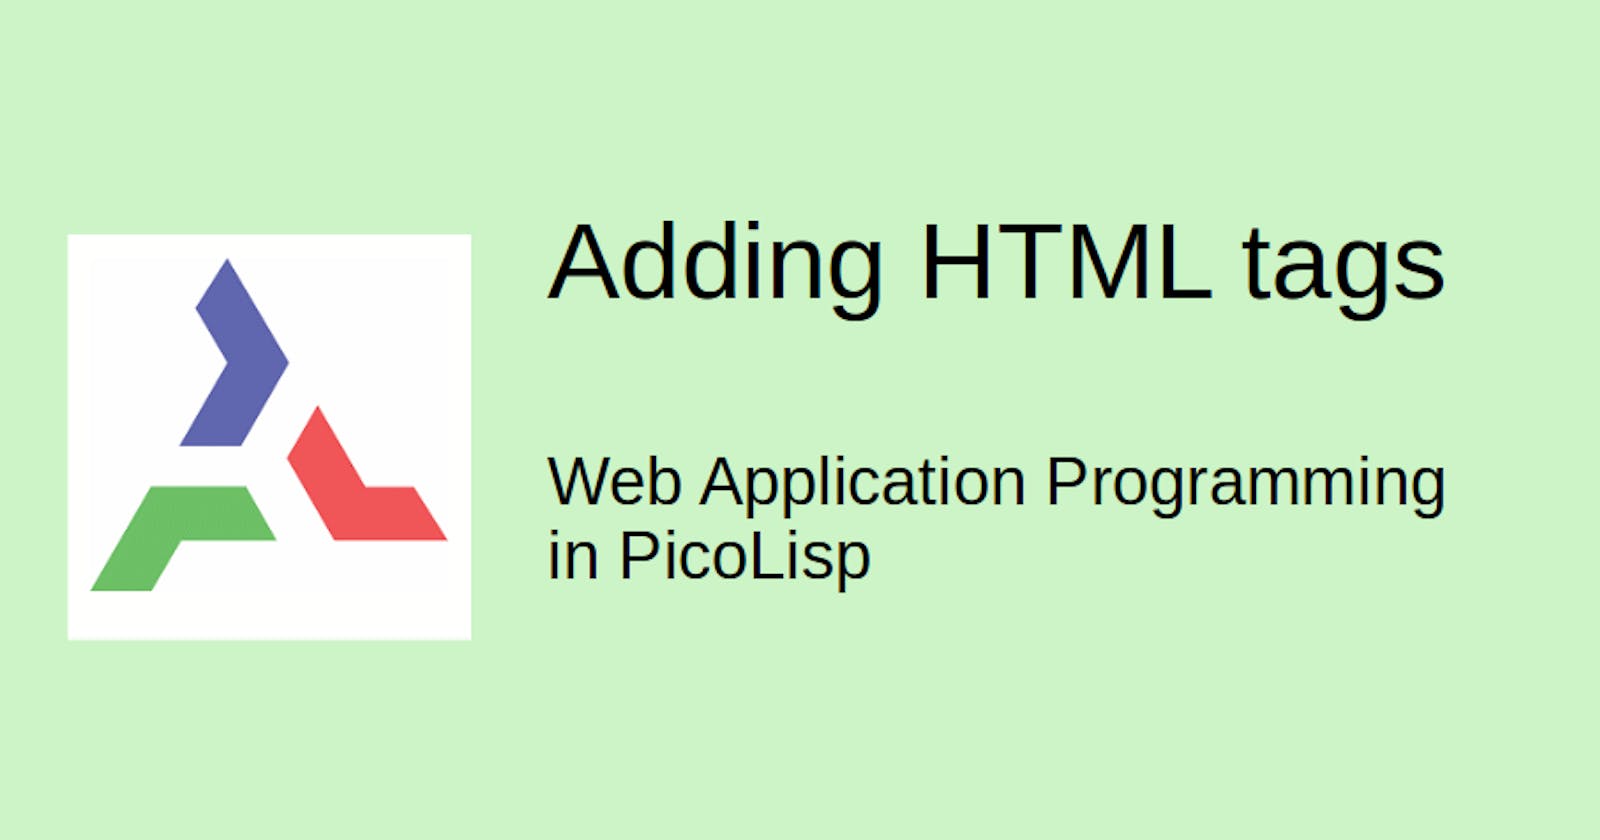 Web Application Programming in PicoLisp: Adding HTML Tags